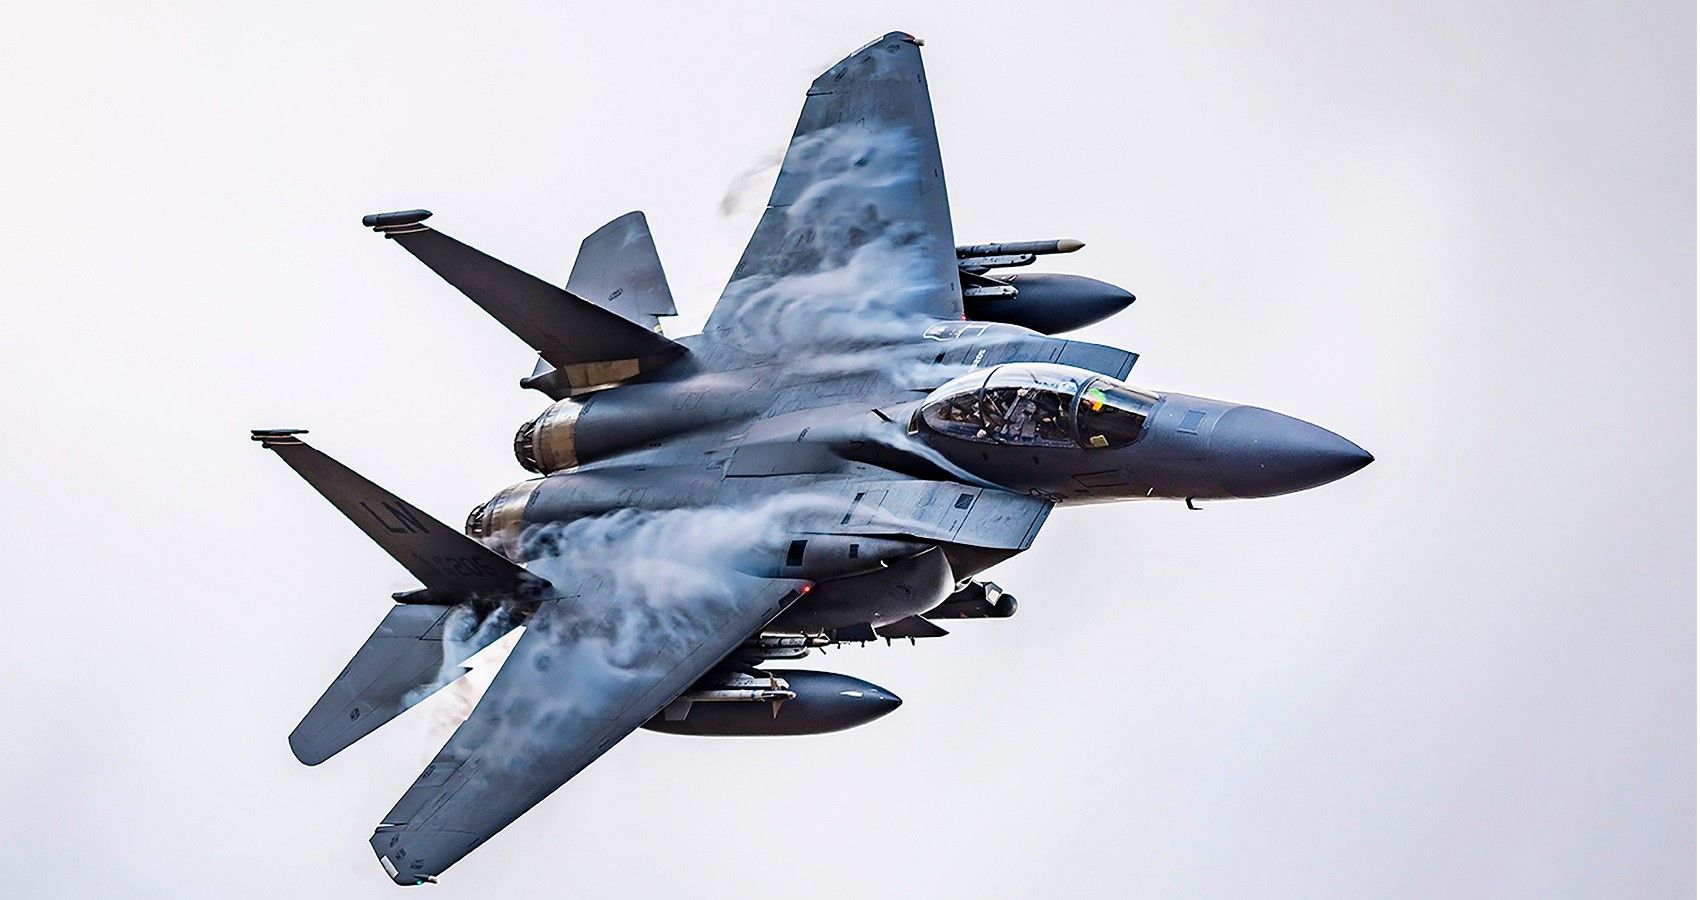 F-15 Eagle - High speed Maneuvers